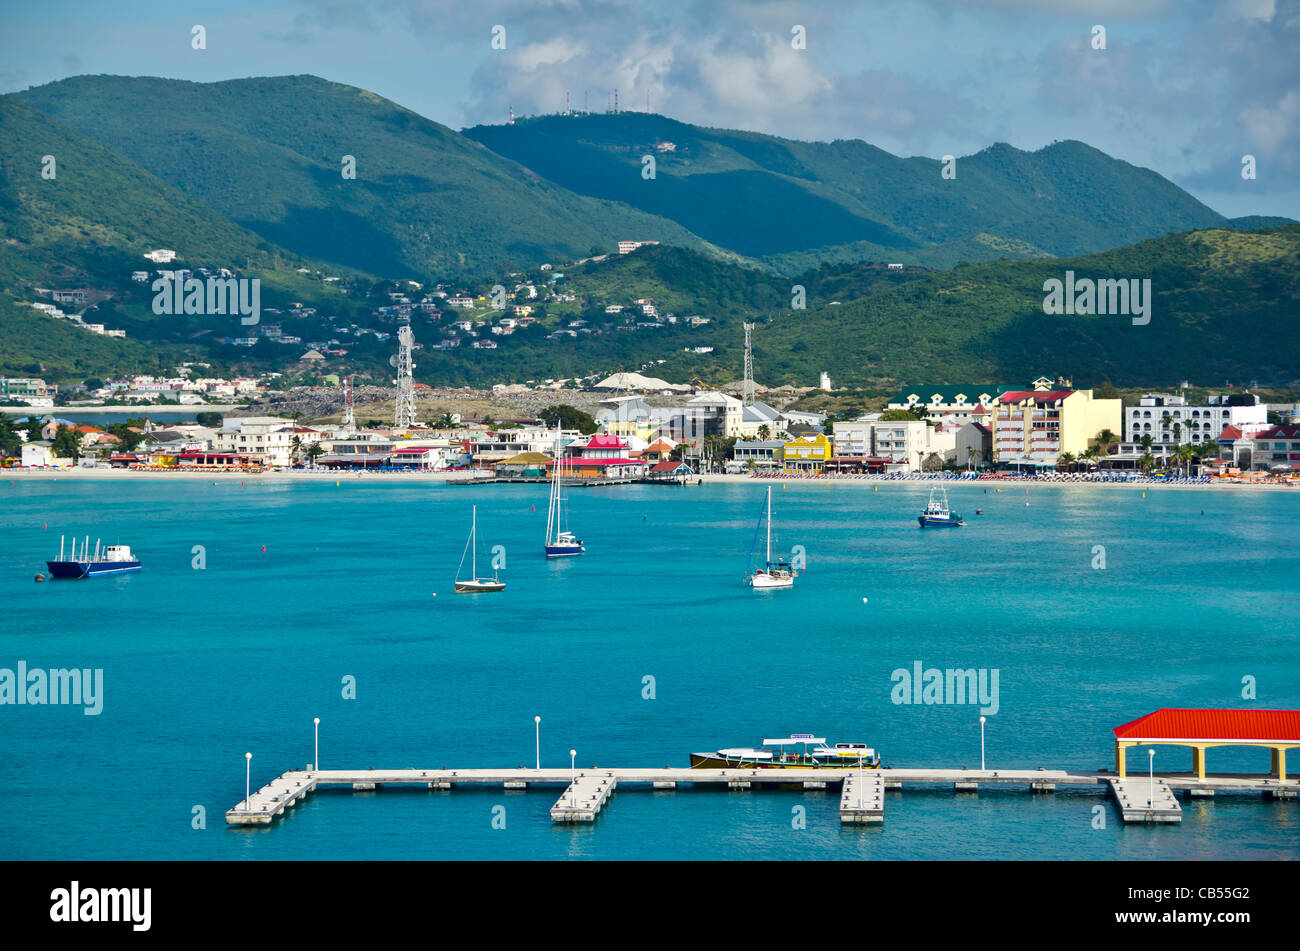 St Maarten Philipsburg city coastal scenic taken from the harbor Stock Photo